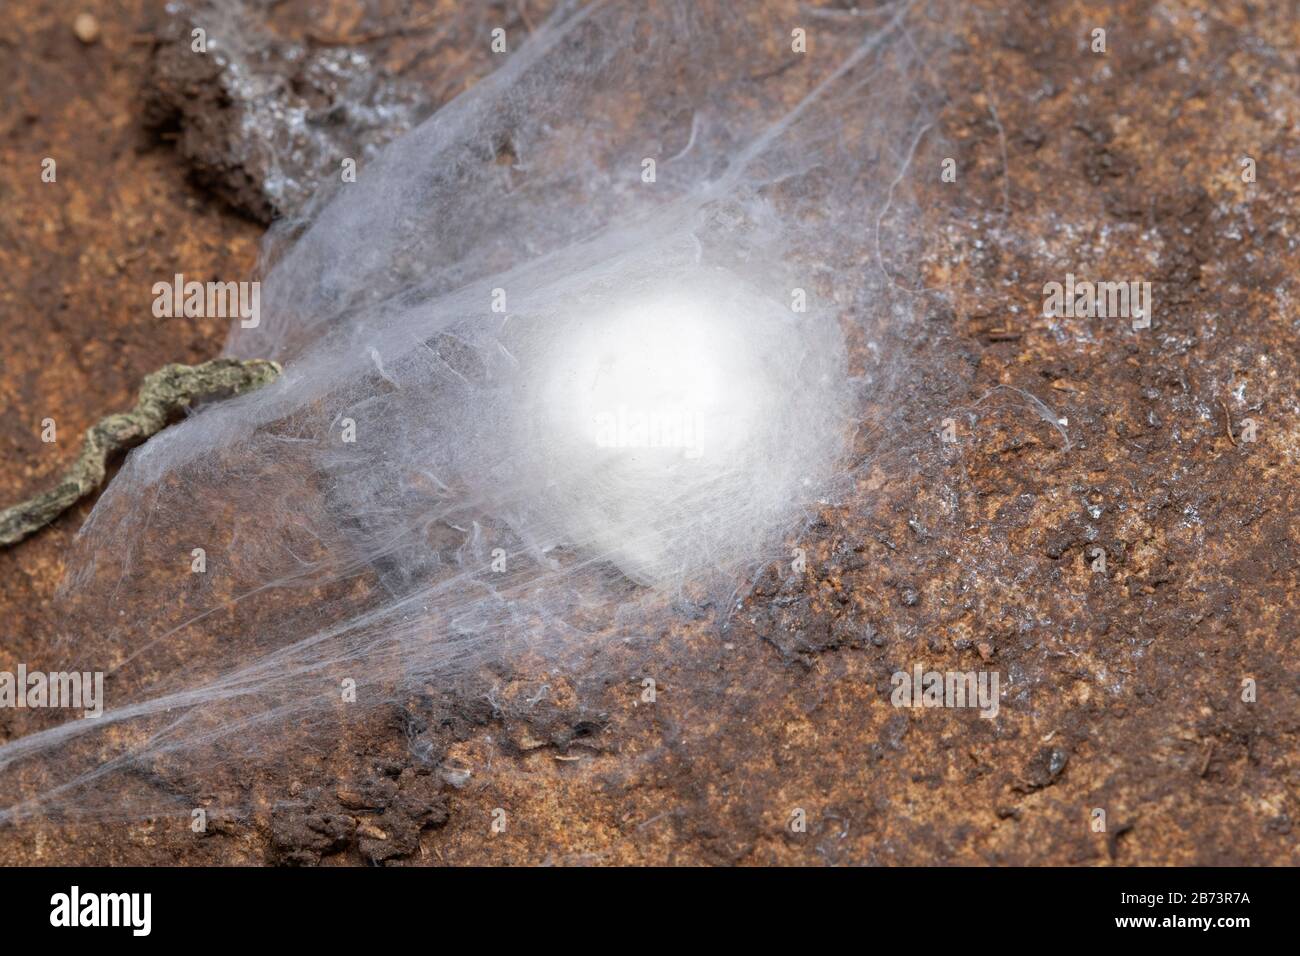 Gnaphosidae, Spider Eggsack, Ground Dwelling Spider Stock Photo